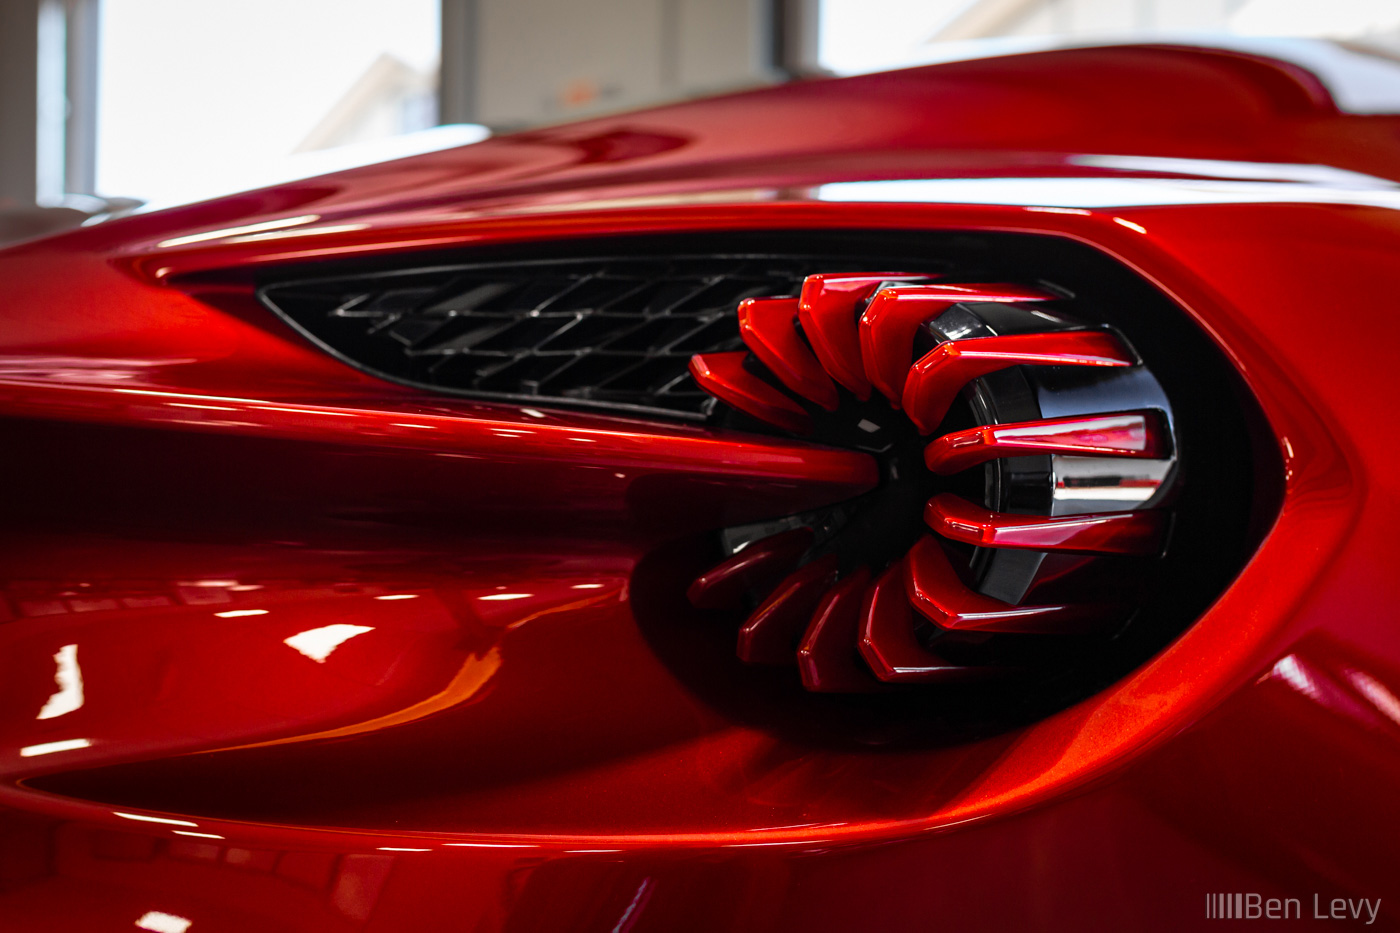 'Blade' Tail Light on Red Aston Martin Vanquish Zagato